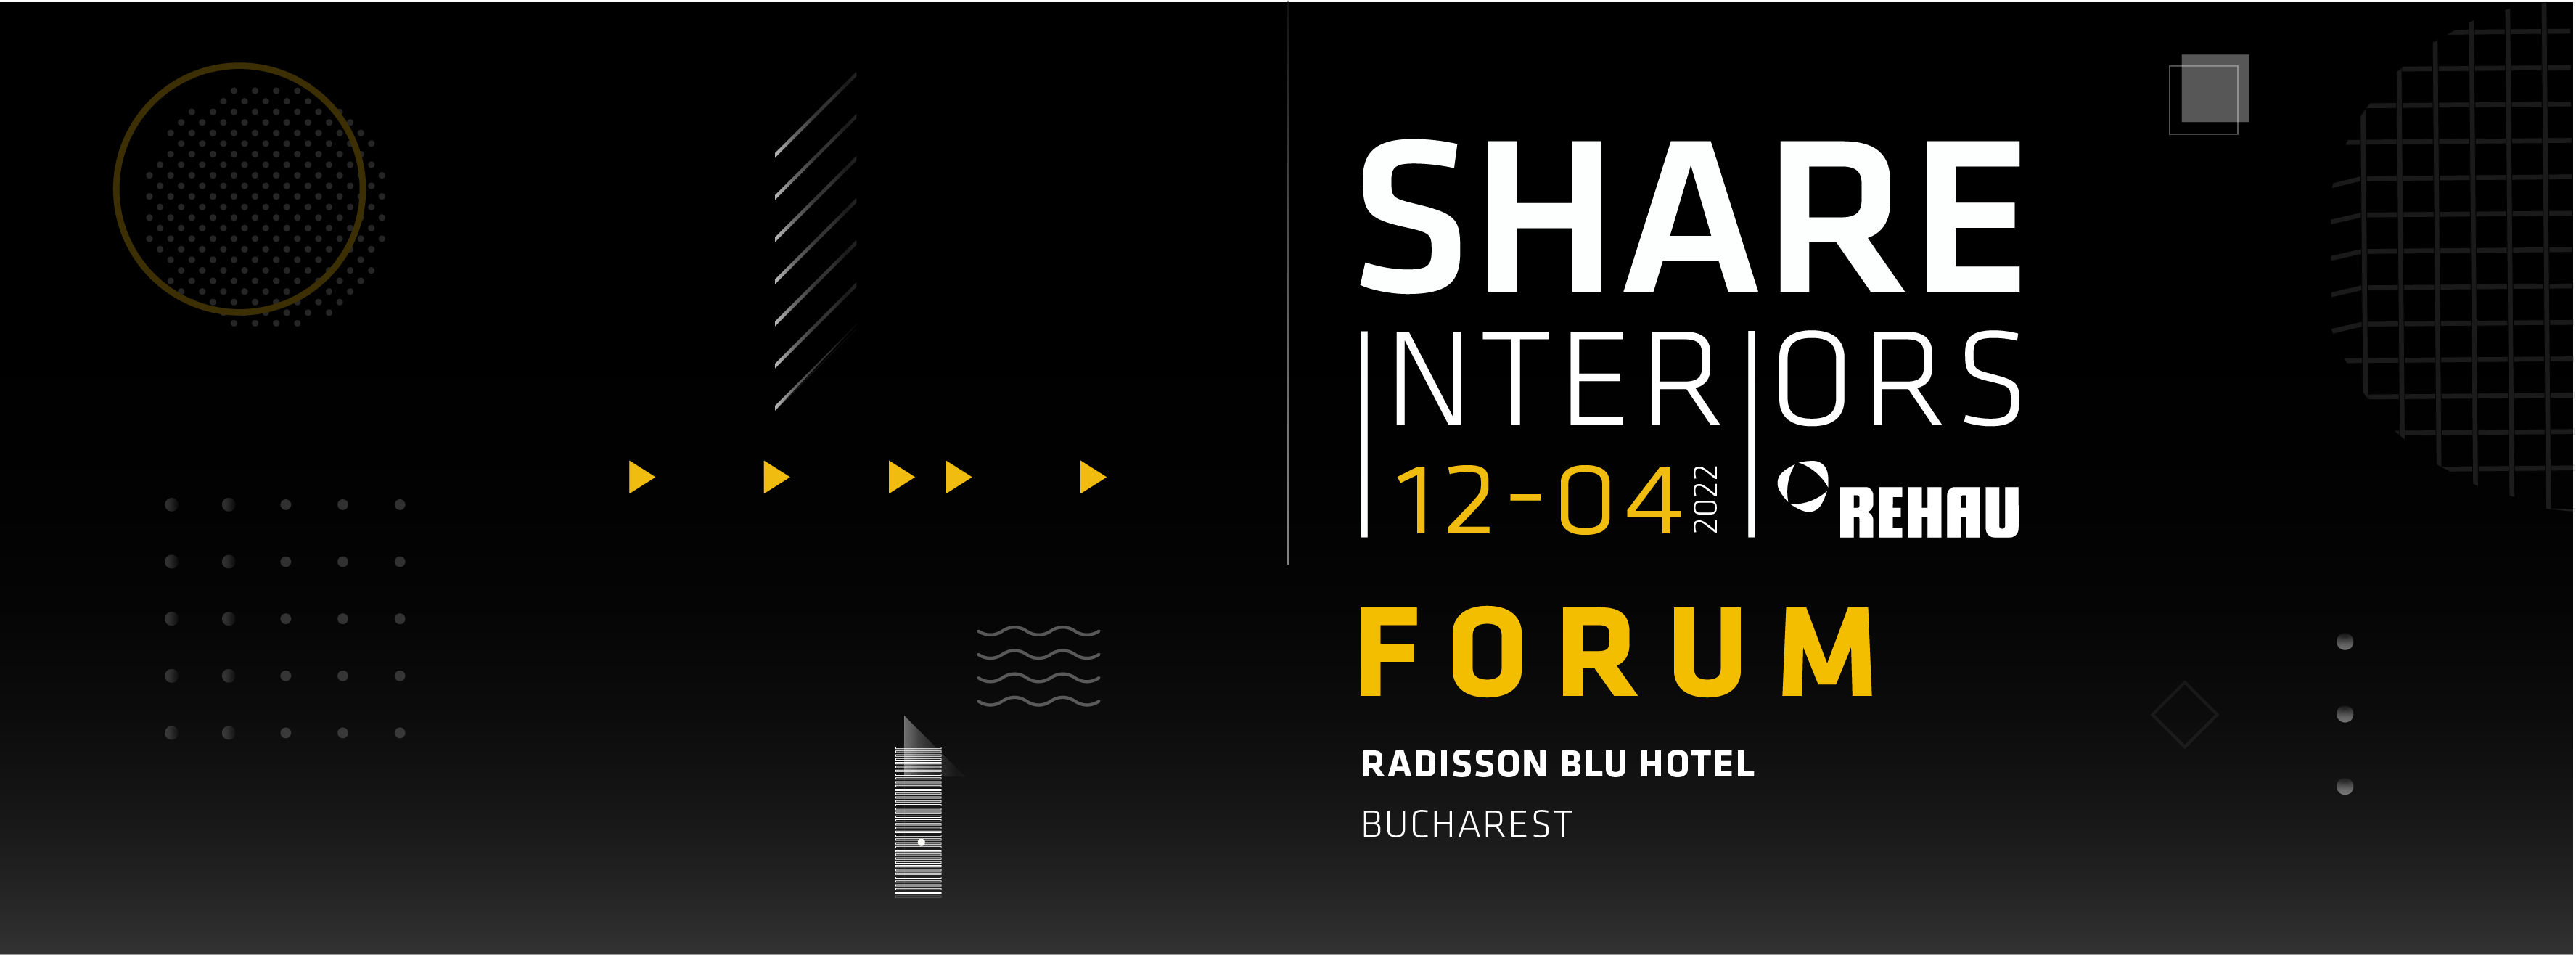 SHARE Interiors Forum Romania